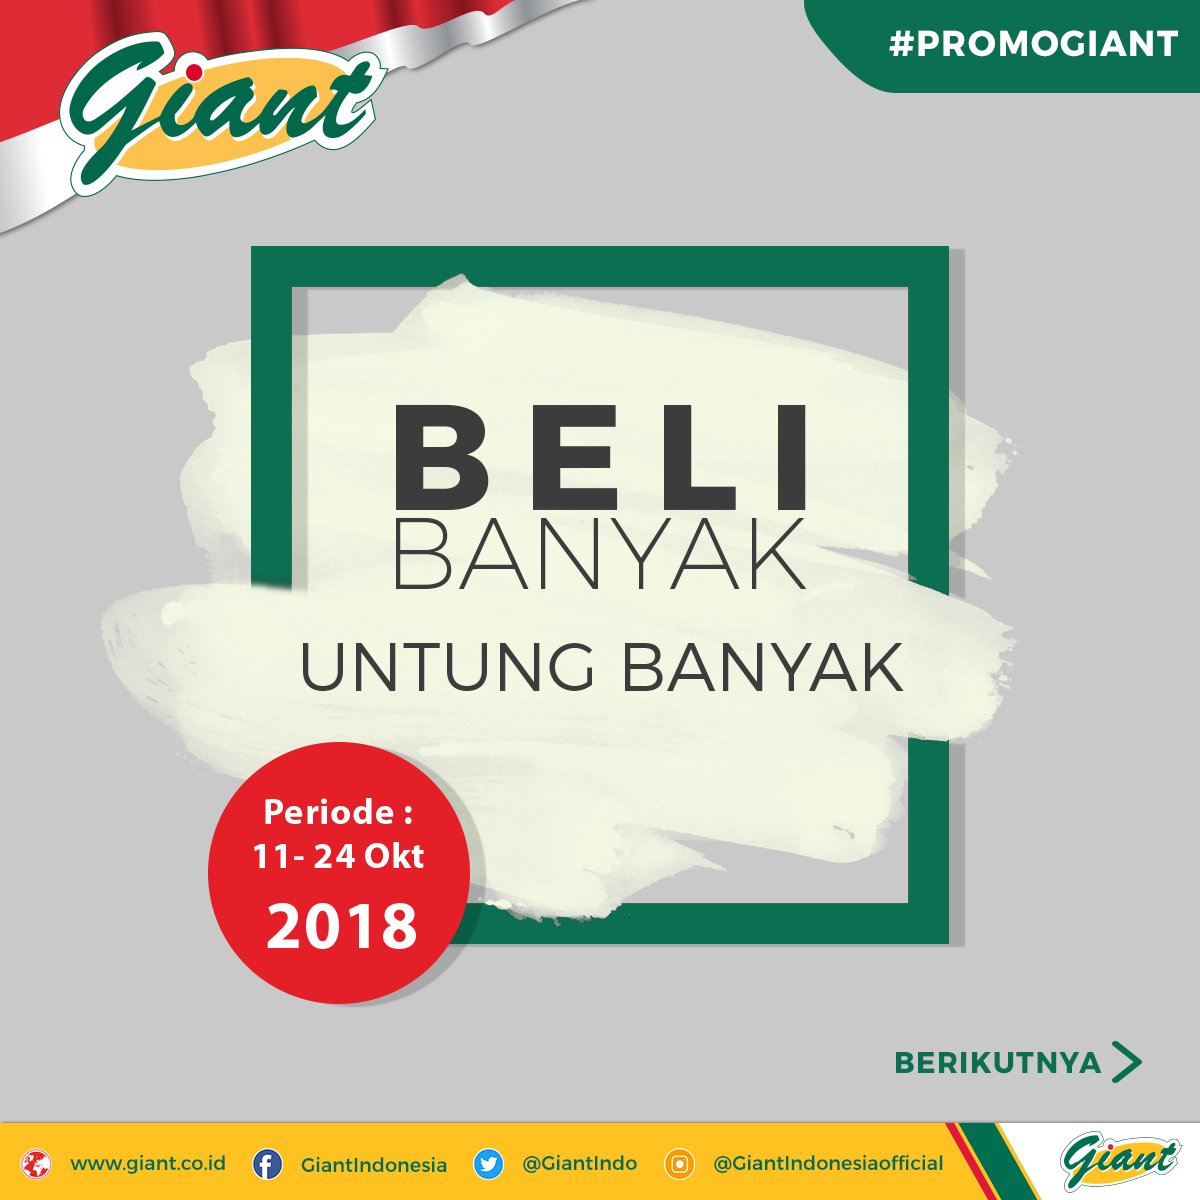 Giant - Promo Giant Ekstra Beli Banyak Untung Banyak (s.d 24 Okt 2018)